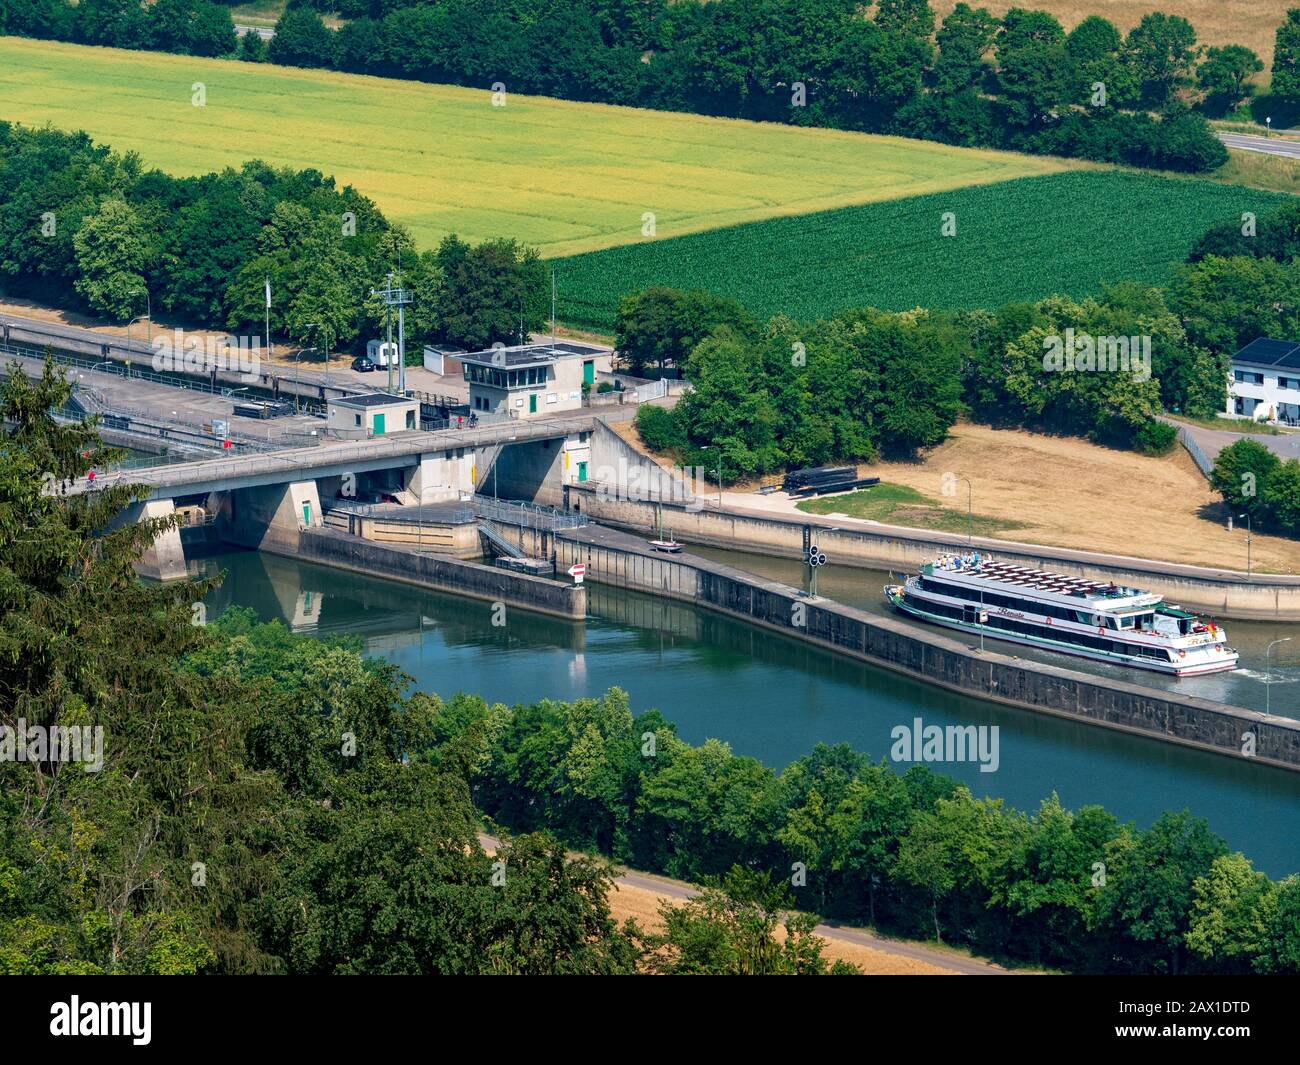 Main-Donau-Kanal-Schleuse Bei Kelheim, Altmühltal, Bayern, Deutschland | Main-Danube-Canal Lock Près De Kelheim, Altmühl Valley, Bavière, Allemagne Banque D'Images